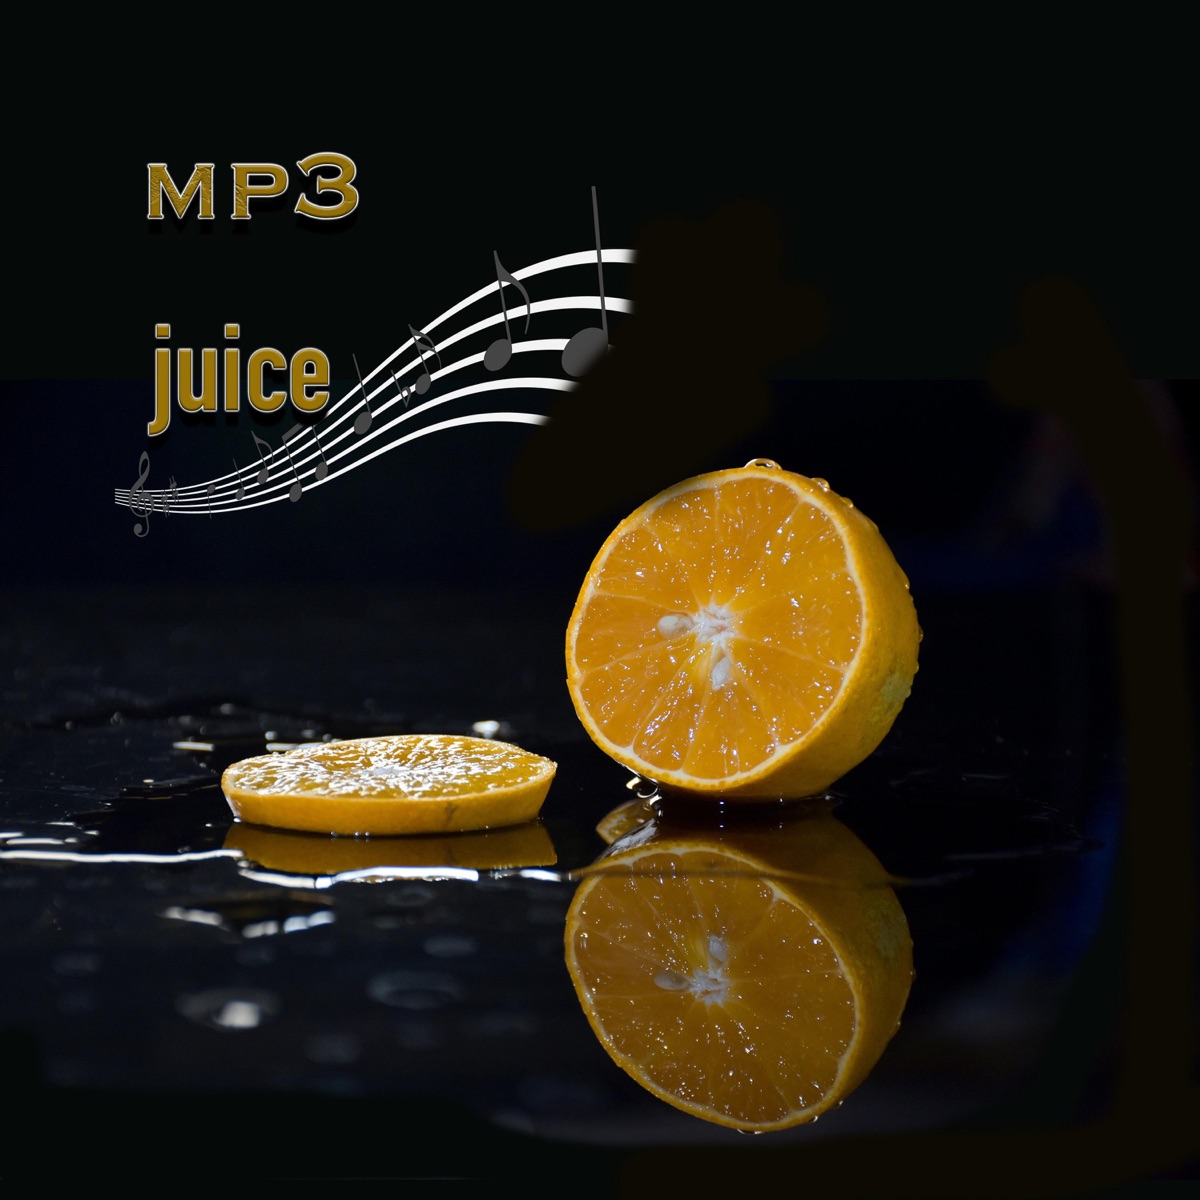 Mp3 Juice - Single - Album by Finestyle - Apple Music